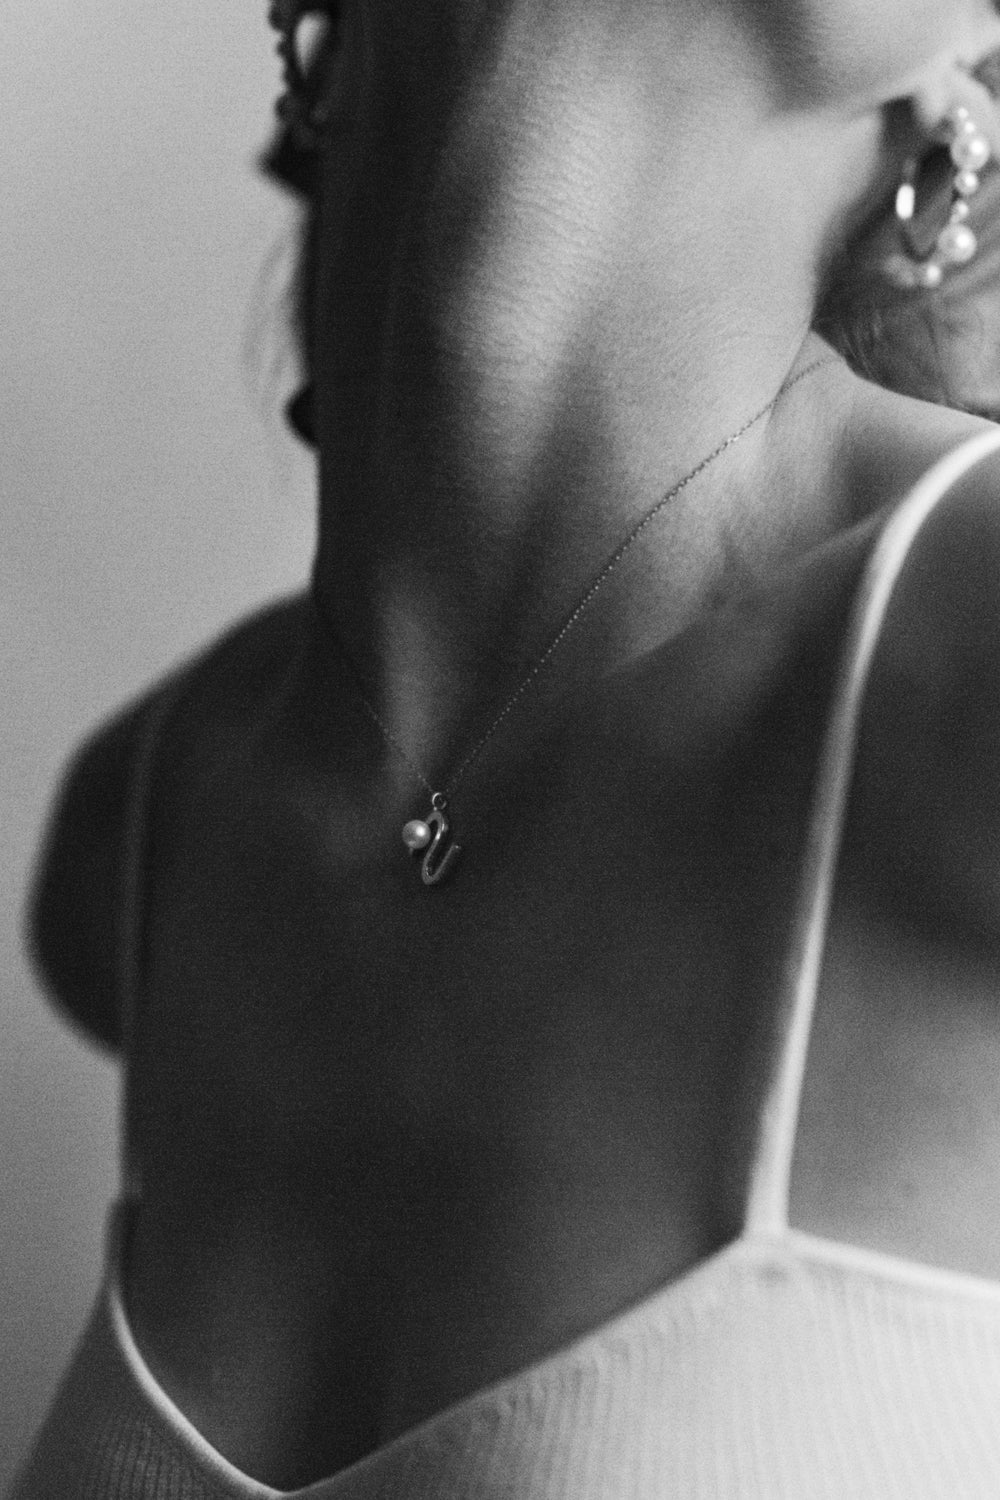 AU rose necklace